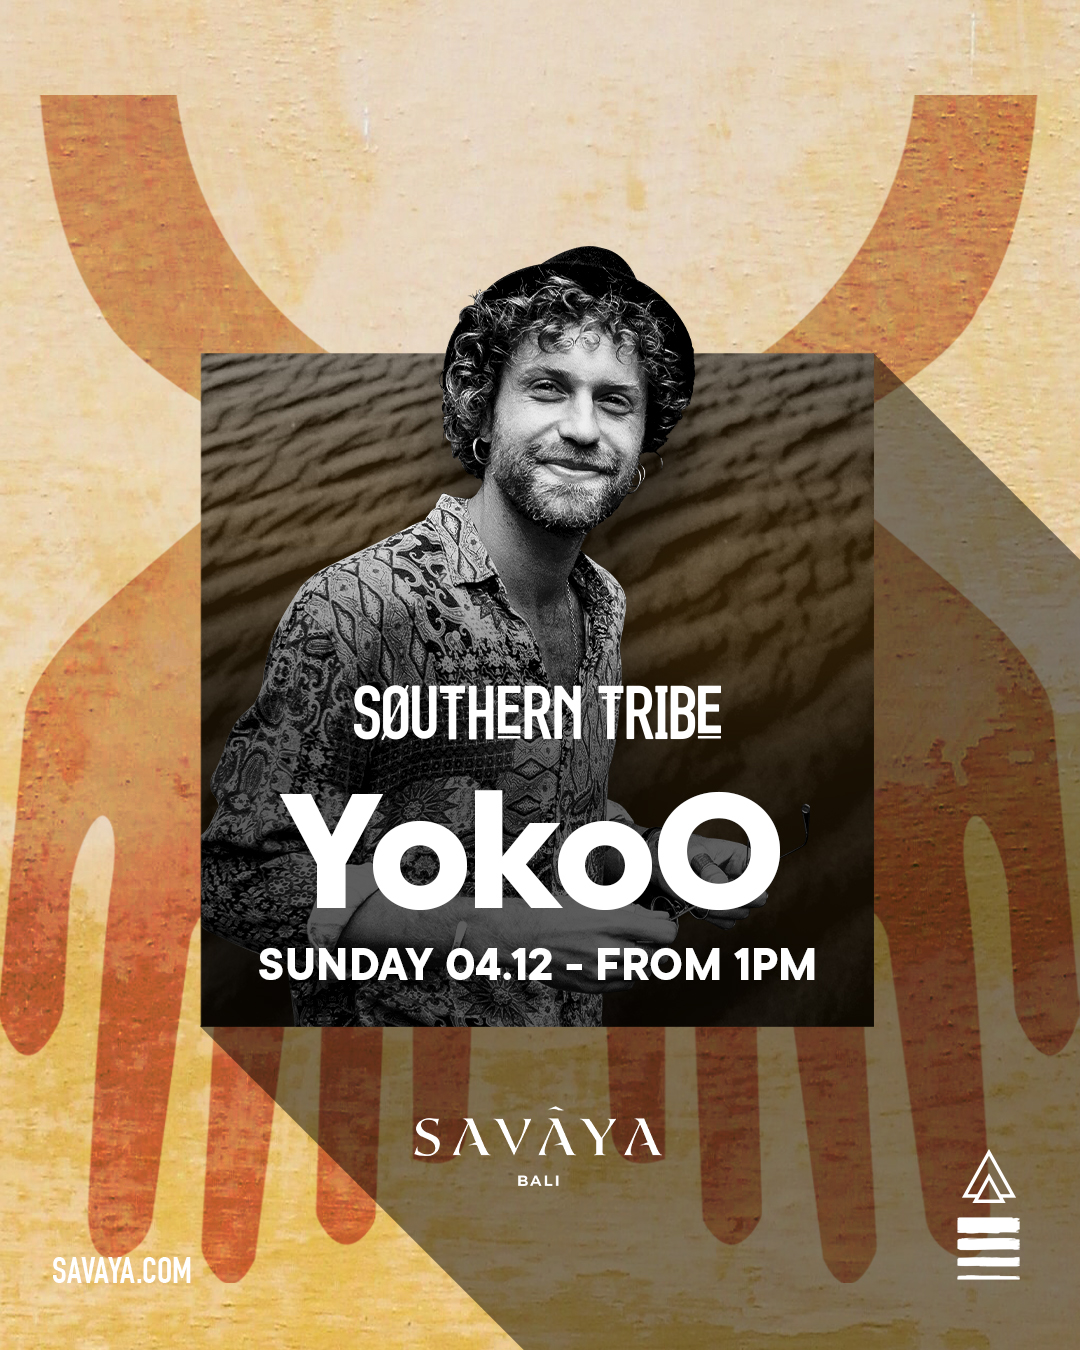 SOUTHERN TRIBE SUNDAYS AT SAVAYA PRESENT YOKOO – SUNDAY DECEMBER 4TH thumbnail image